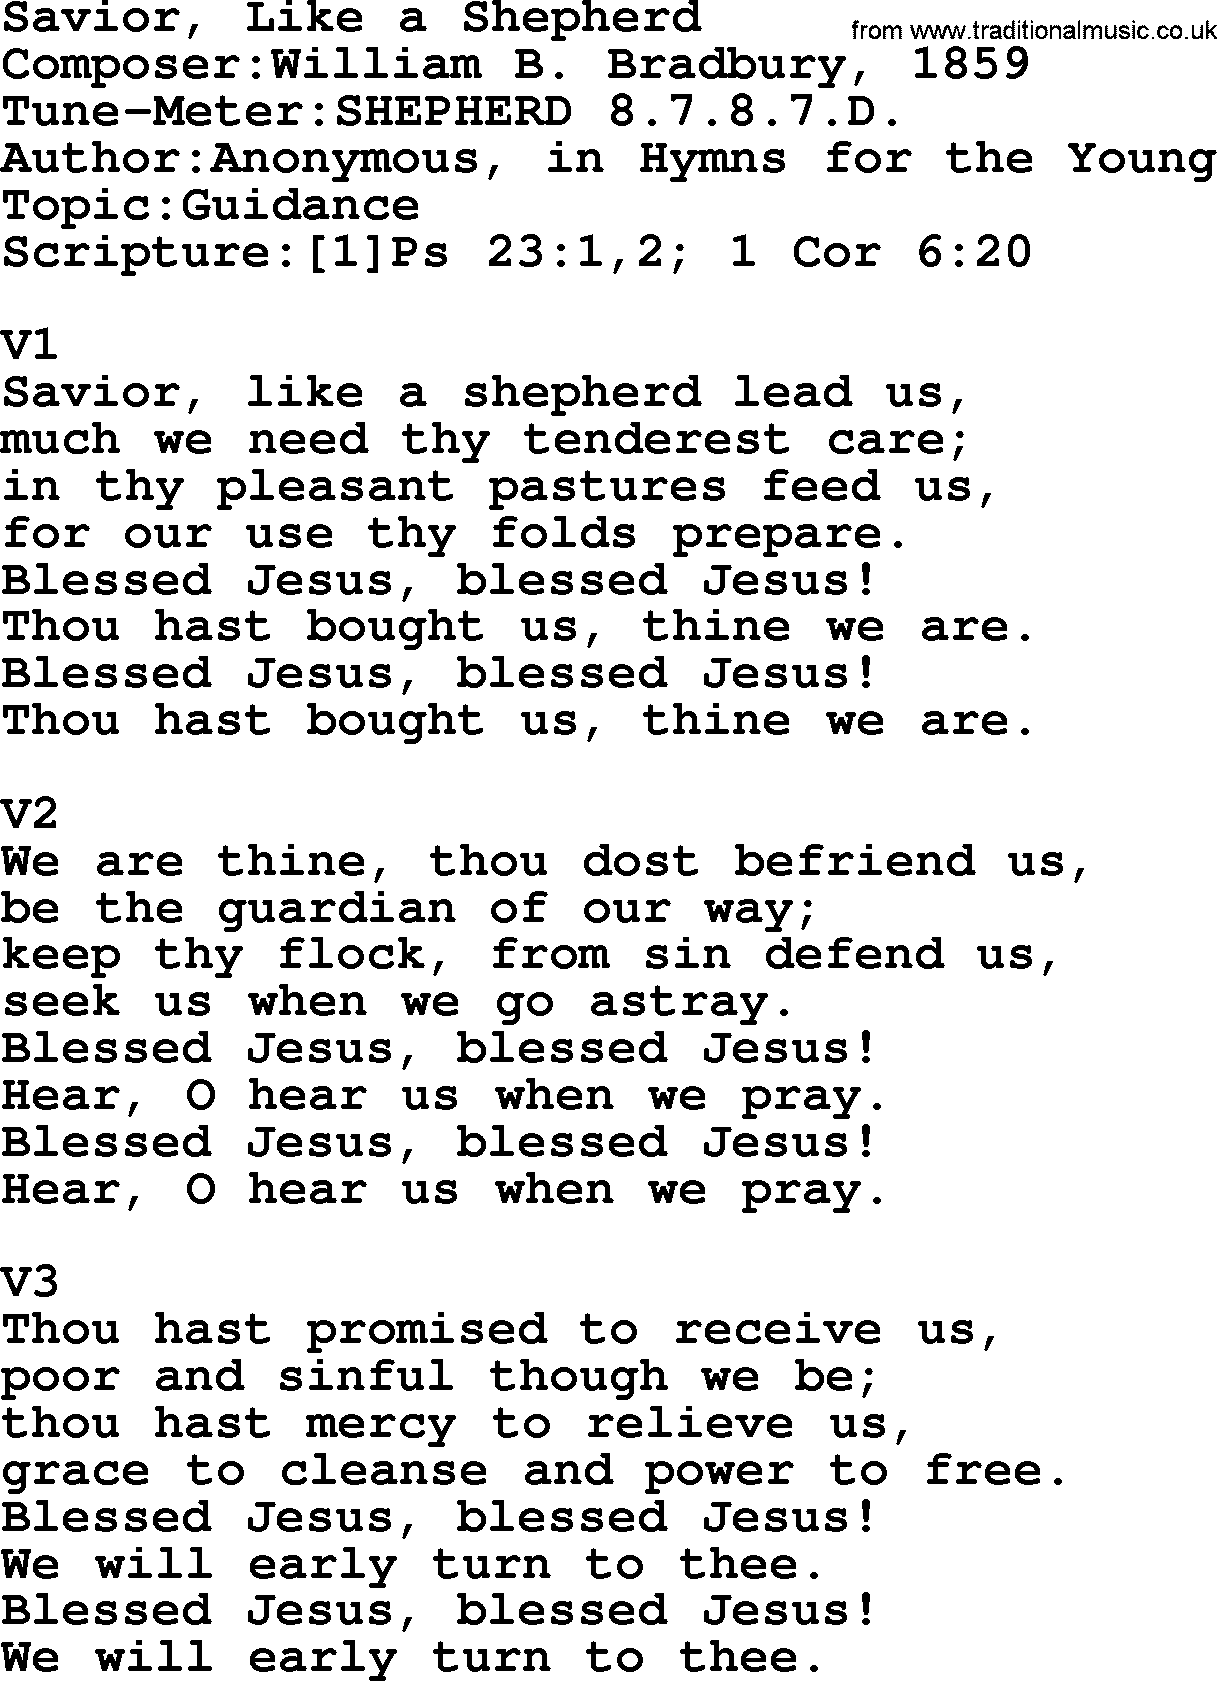 Adventist Hynms collection, Hymn: Savior, Like A Shepherd, lyrics with PDF